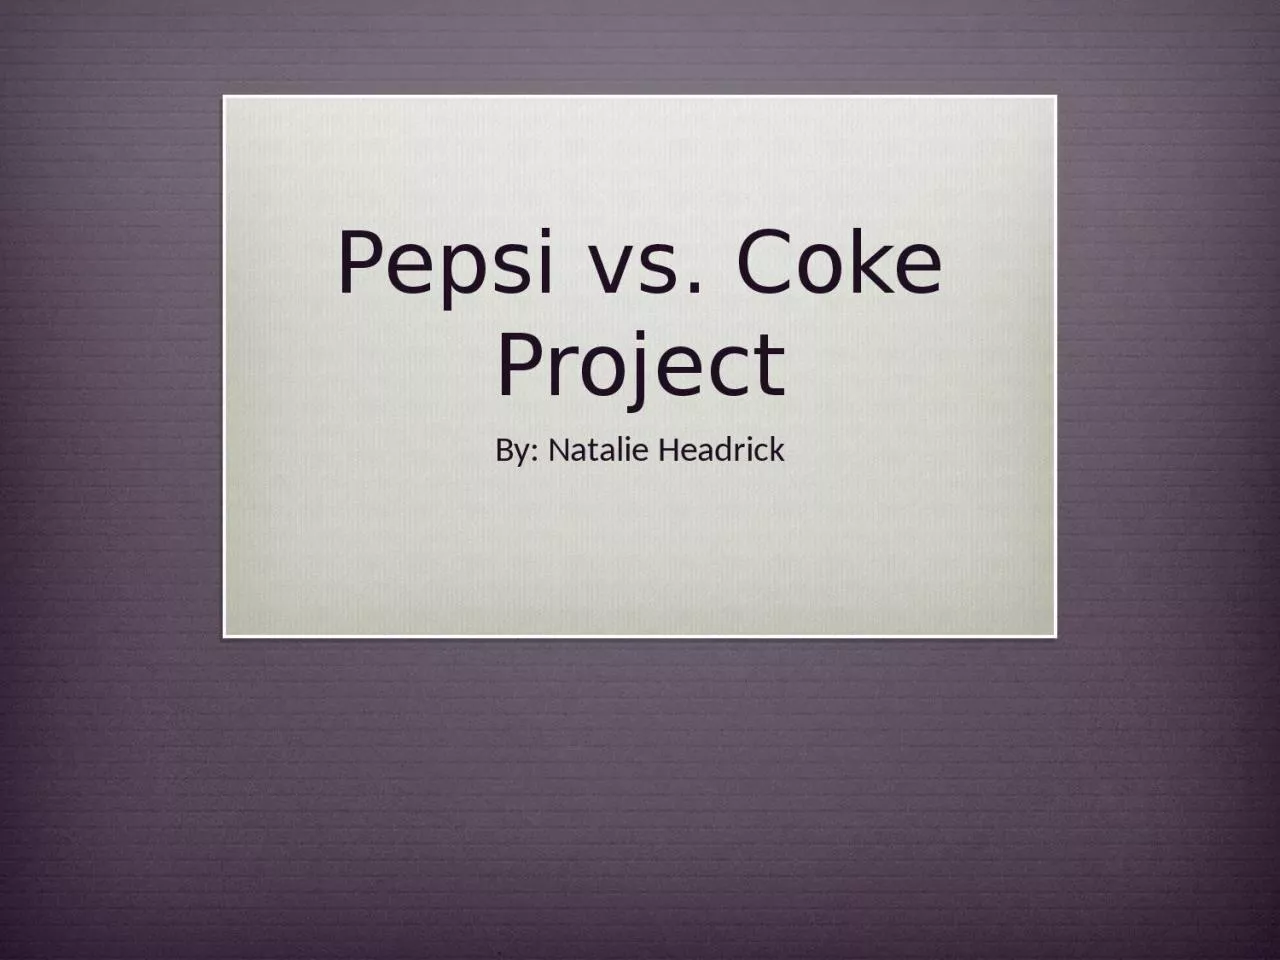 Pepsi vs. Coke Project By: Natalie Headrick